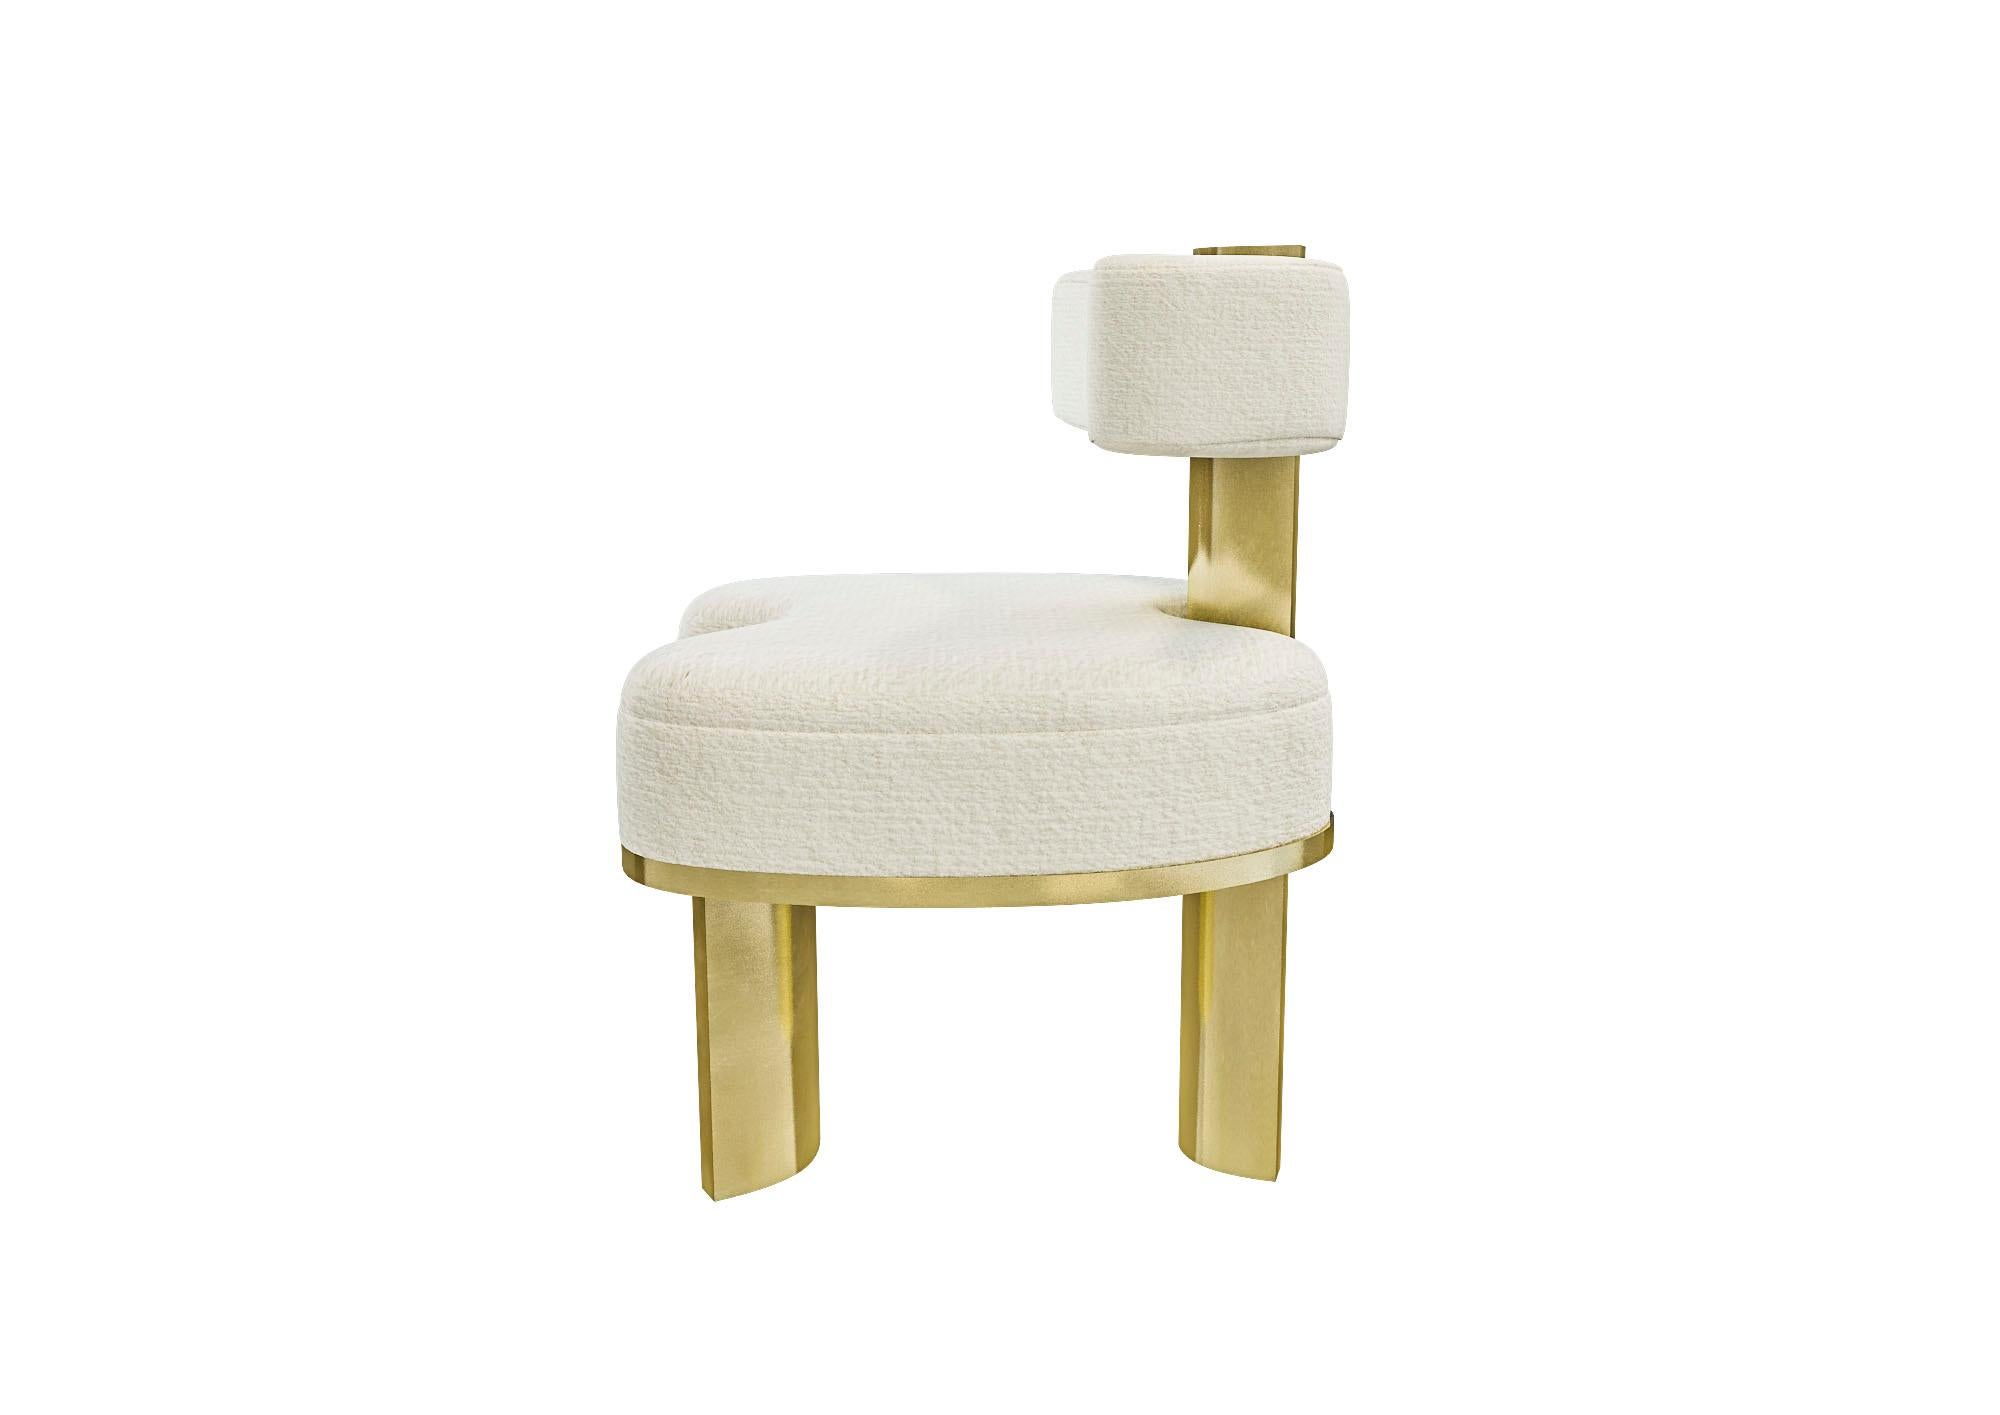 Upholstery Gold Yoda Chair by Melis Tatlicibasi